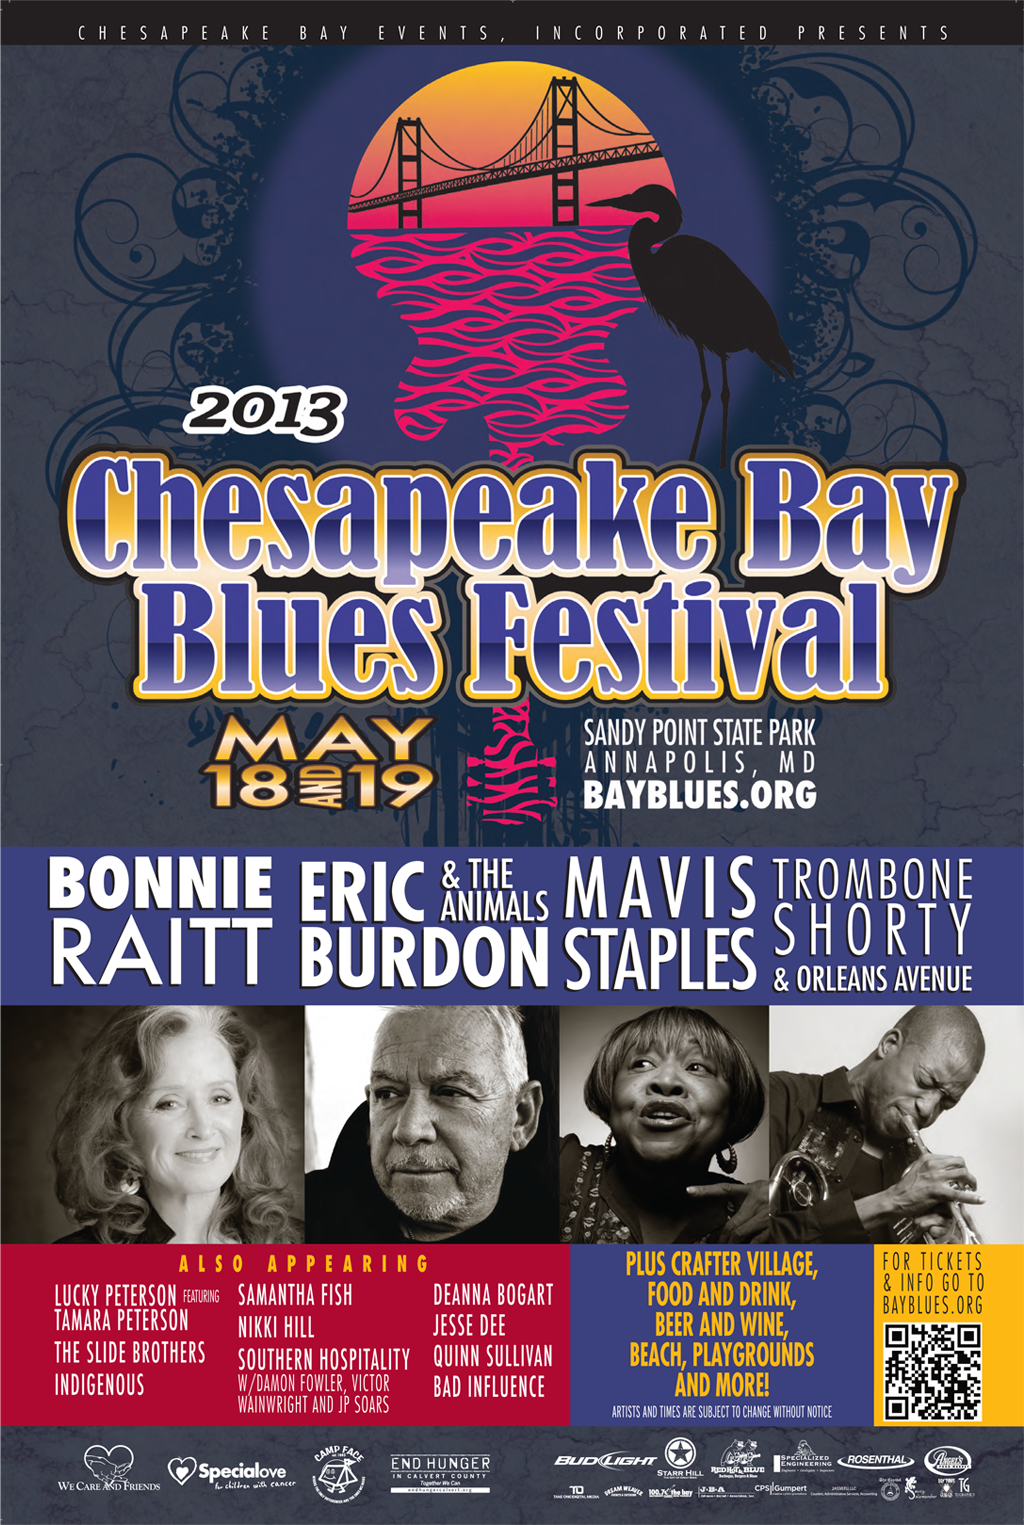 Chesapeake Bay Blues Festival WRNR FM 103.1